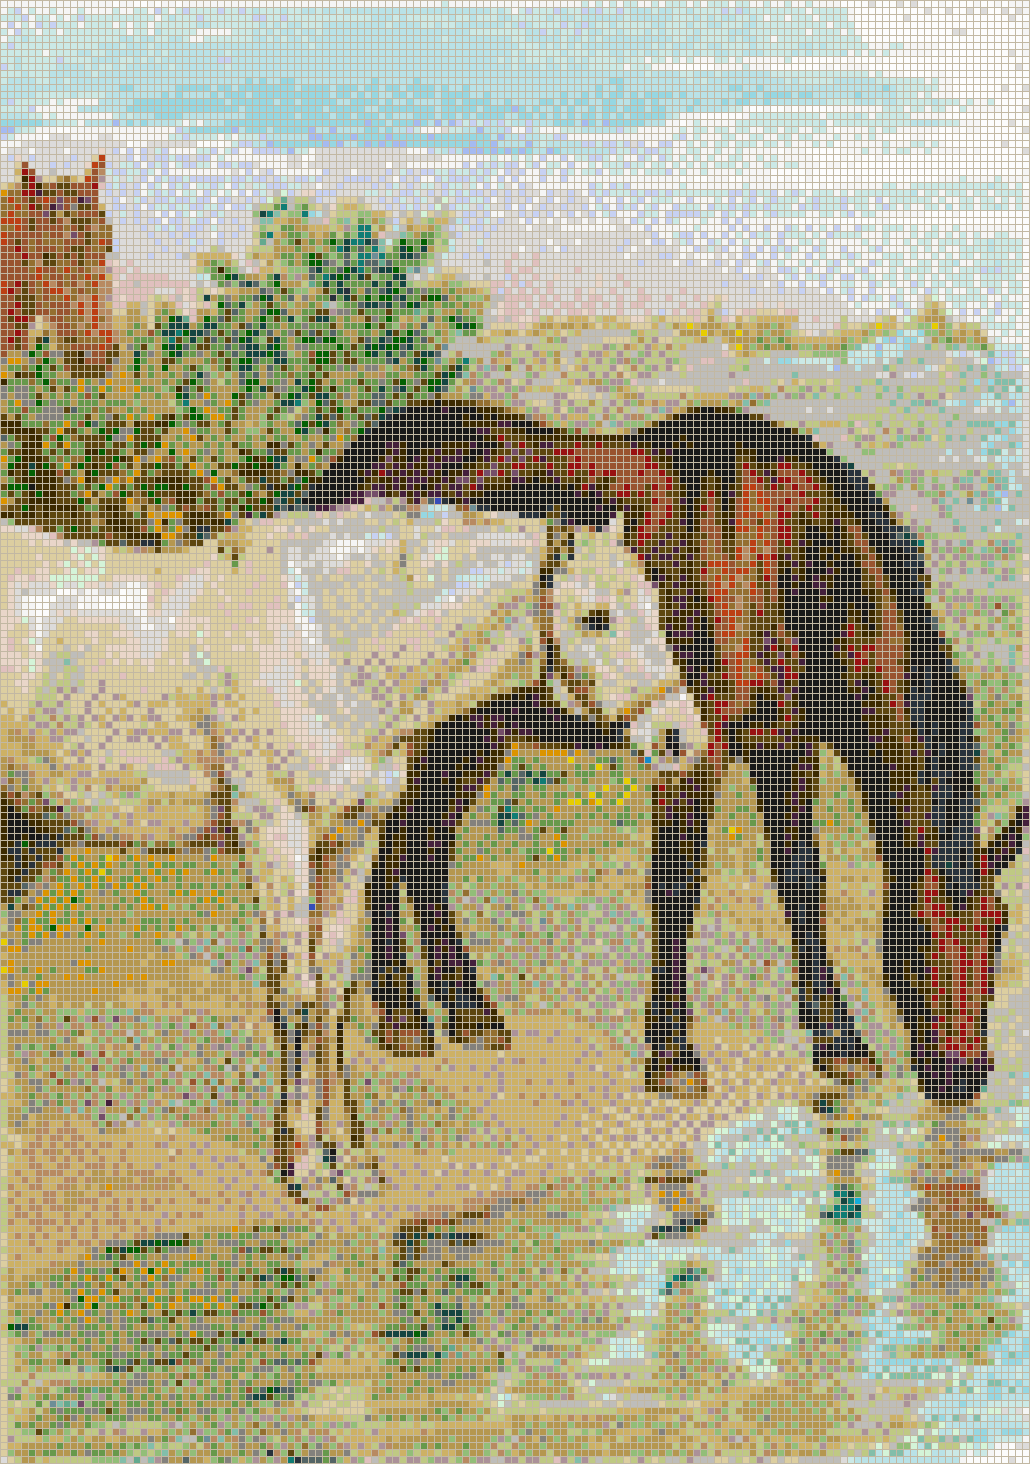 Horses Drinking - Mosaic Tile Art